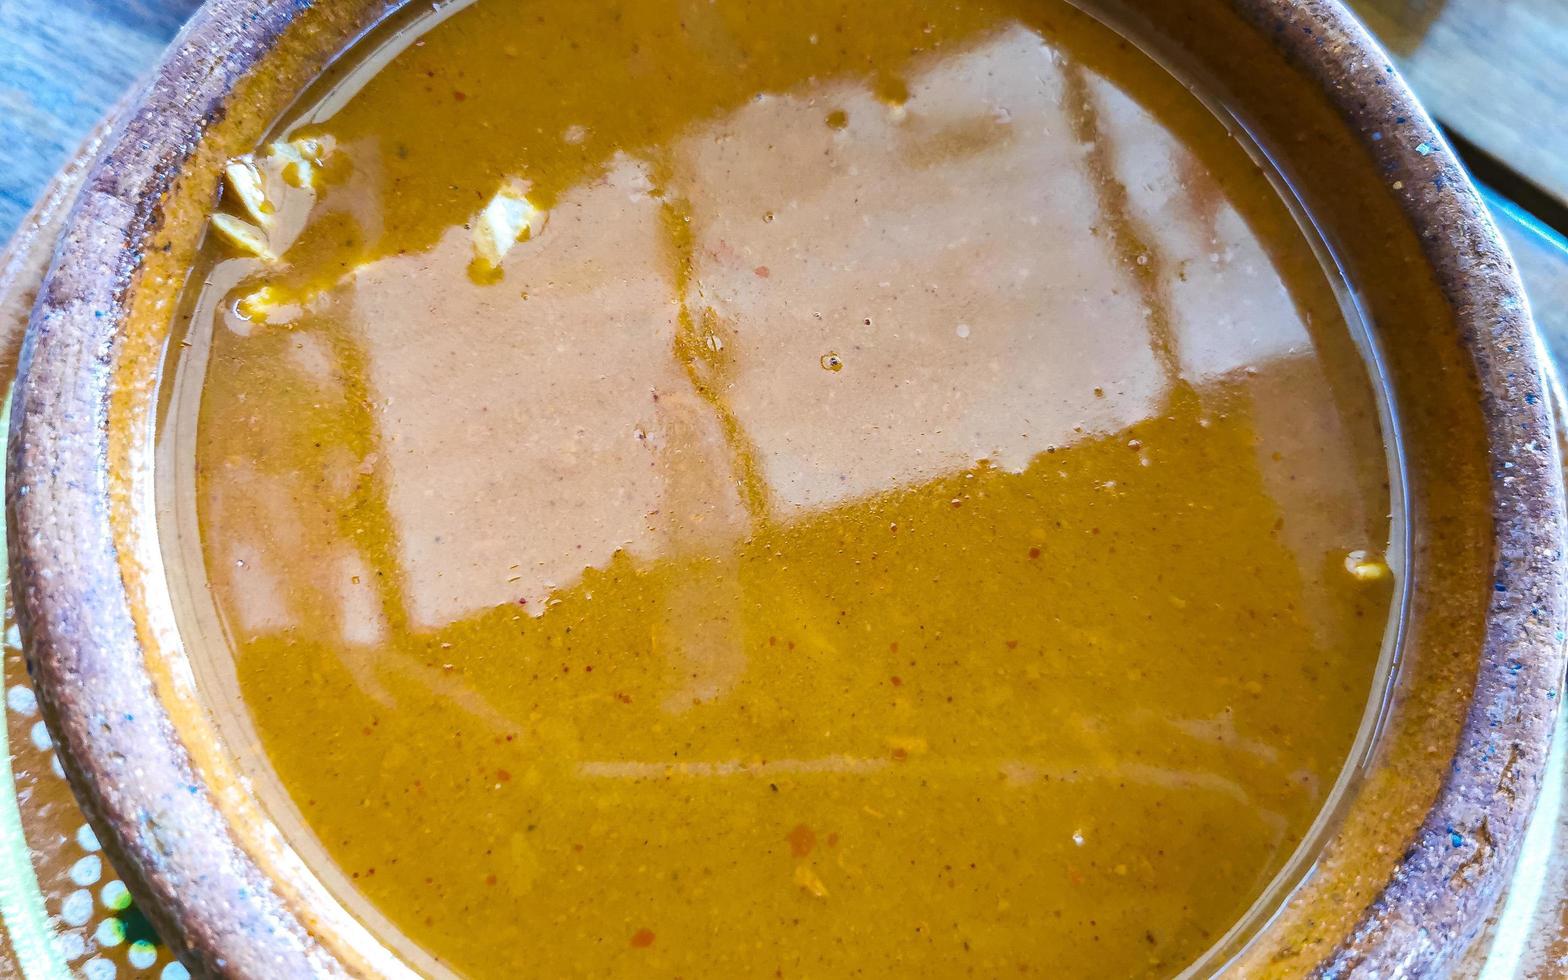 aztec mexikansk soppa i en restaurang playa del carmen Mexiko. foto